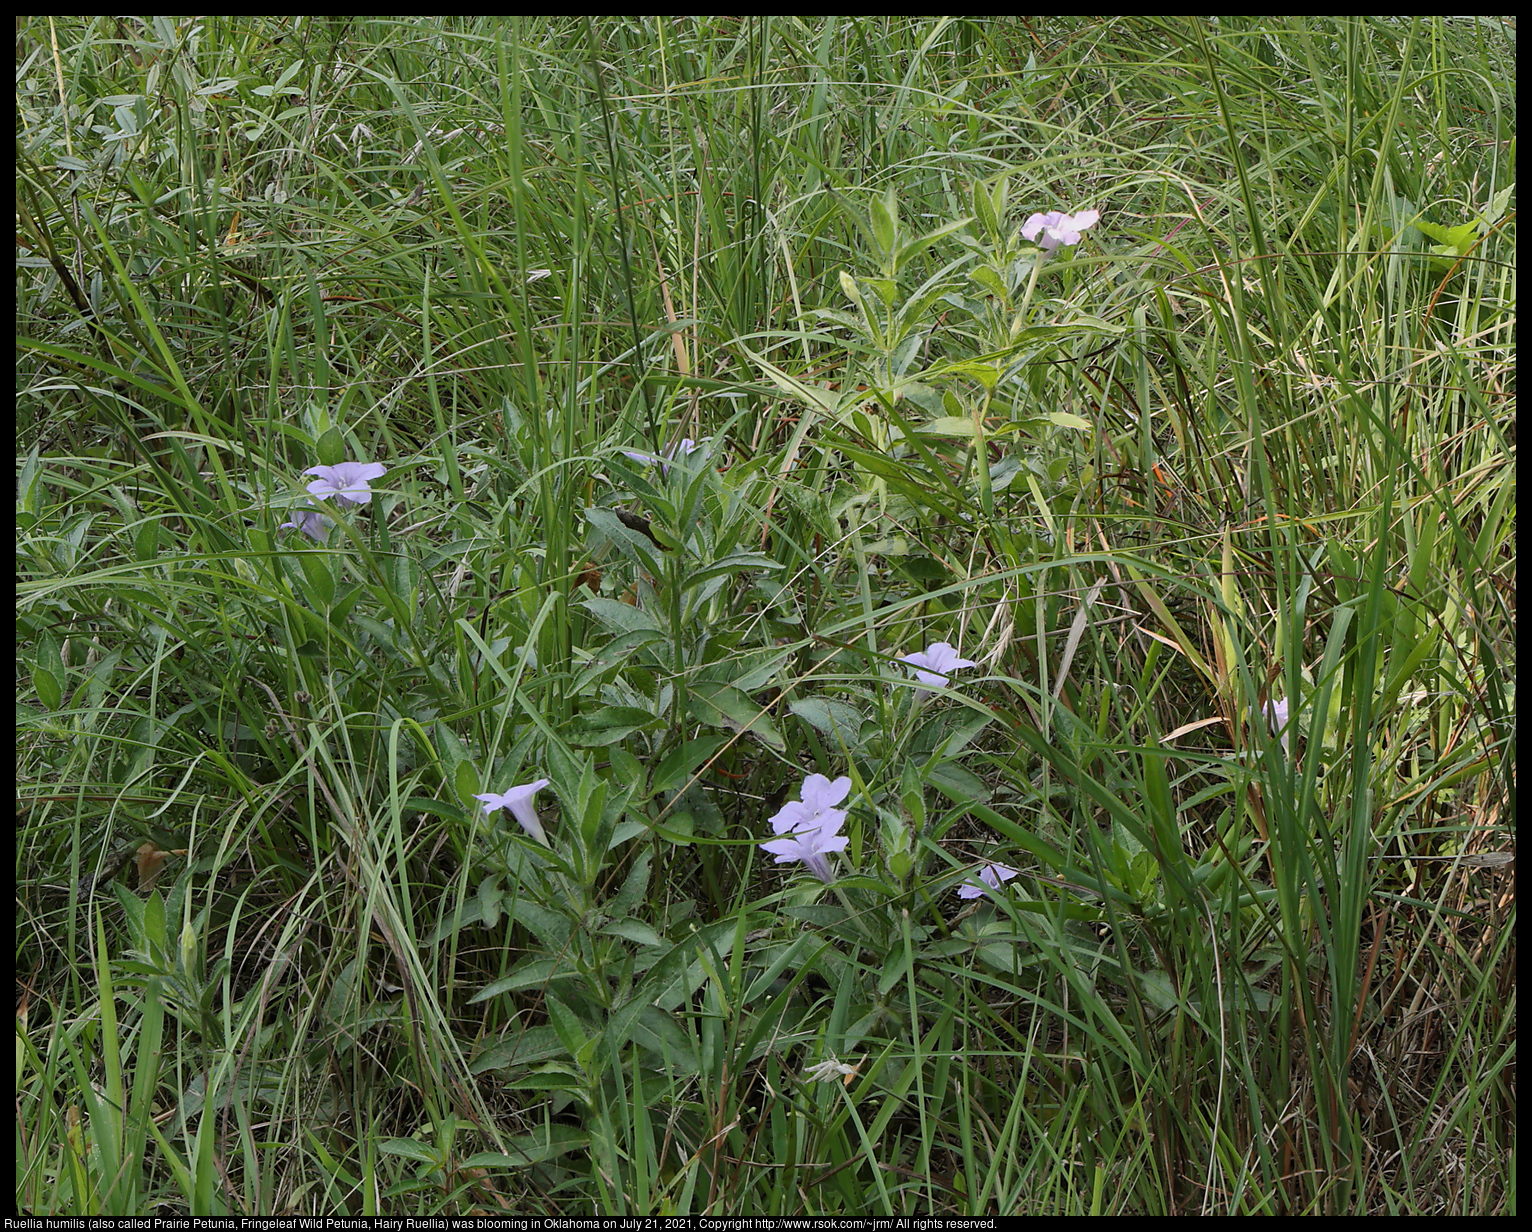 2021jul21_ruellia_IMG_2788-Ruellia humilis (also called Prairie Petunia, Fringeleaf Wild Petunia, Hairy Ruellia) was blooming in Oklahoma on July 21, 2021